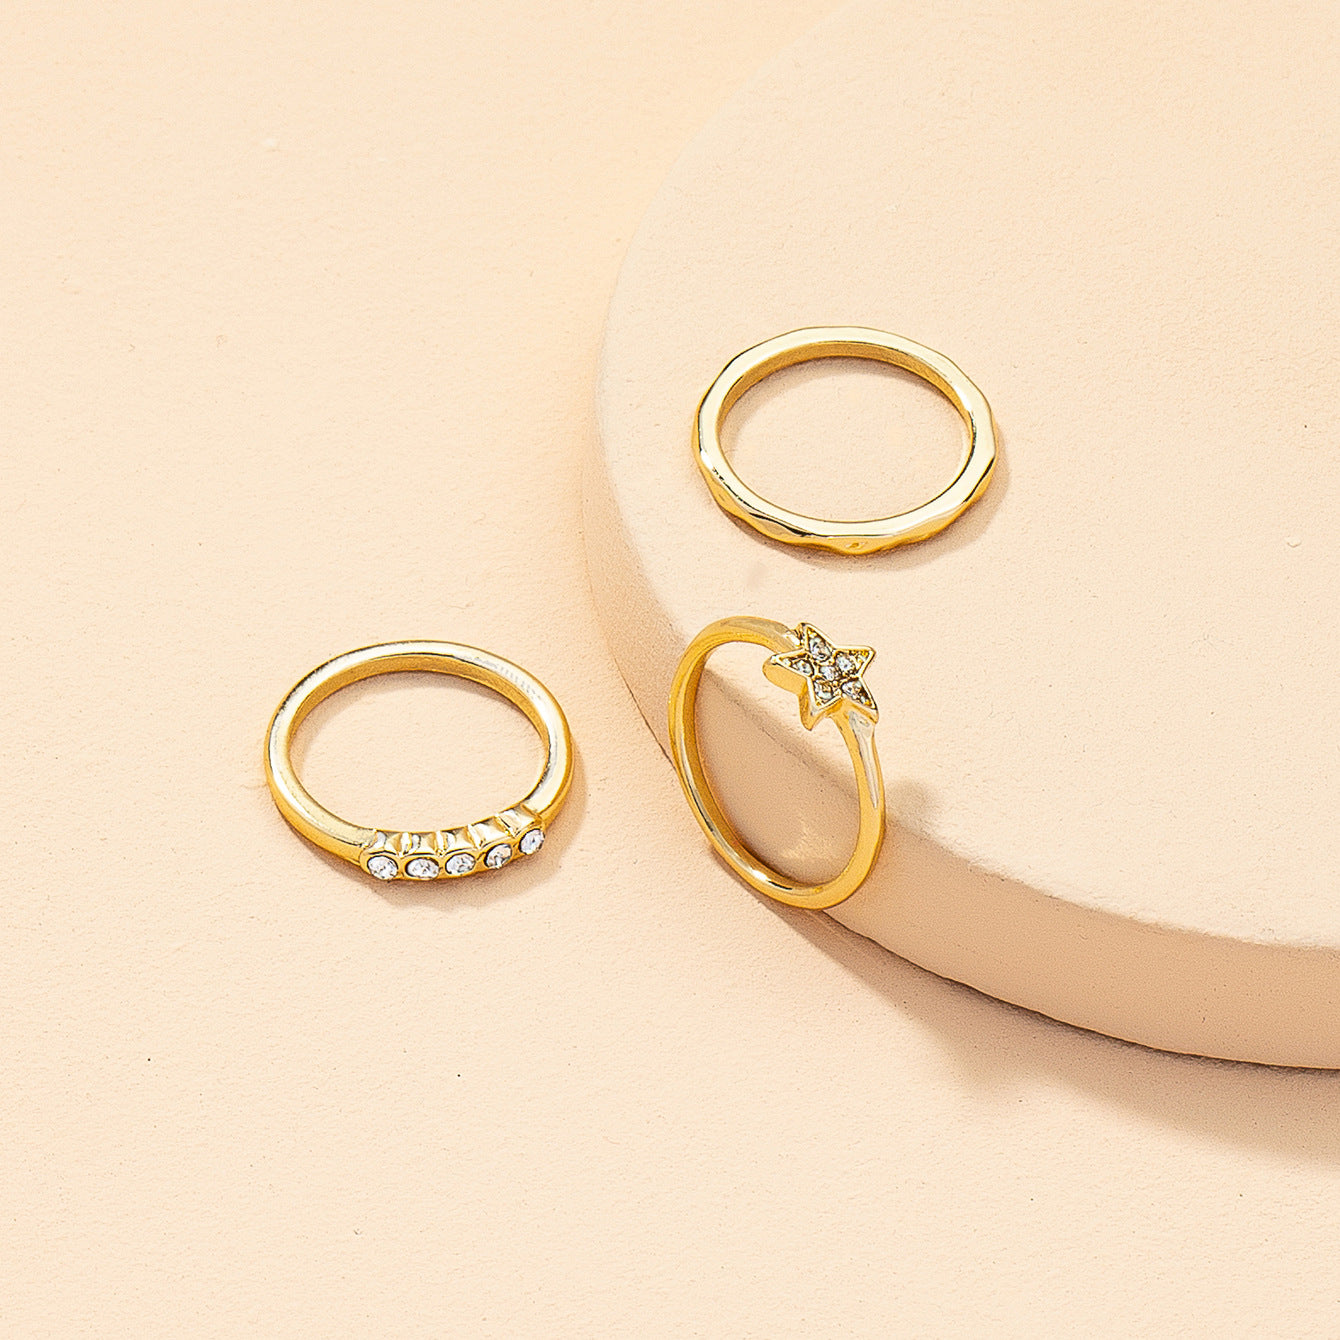 Golden Star and Zircon Ring Set with Cross-Border Design